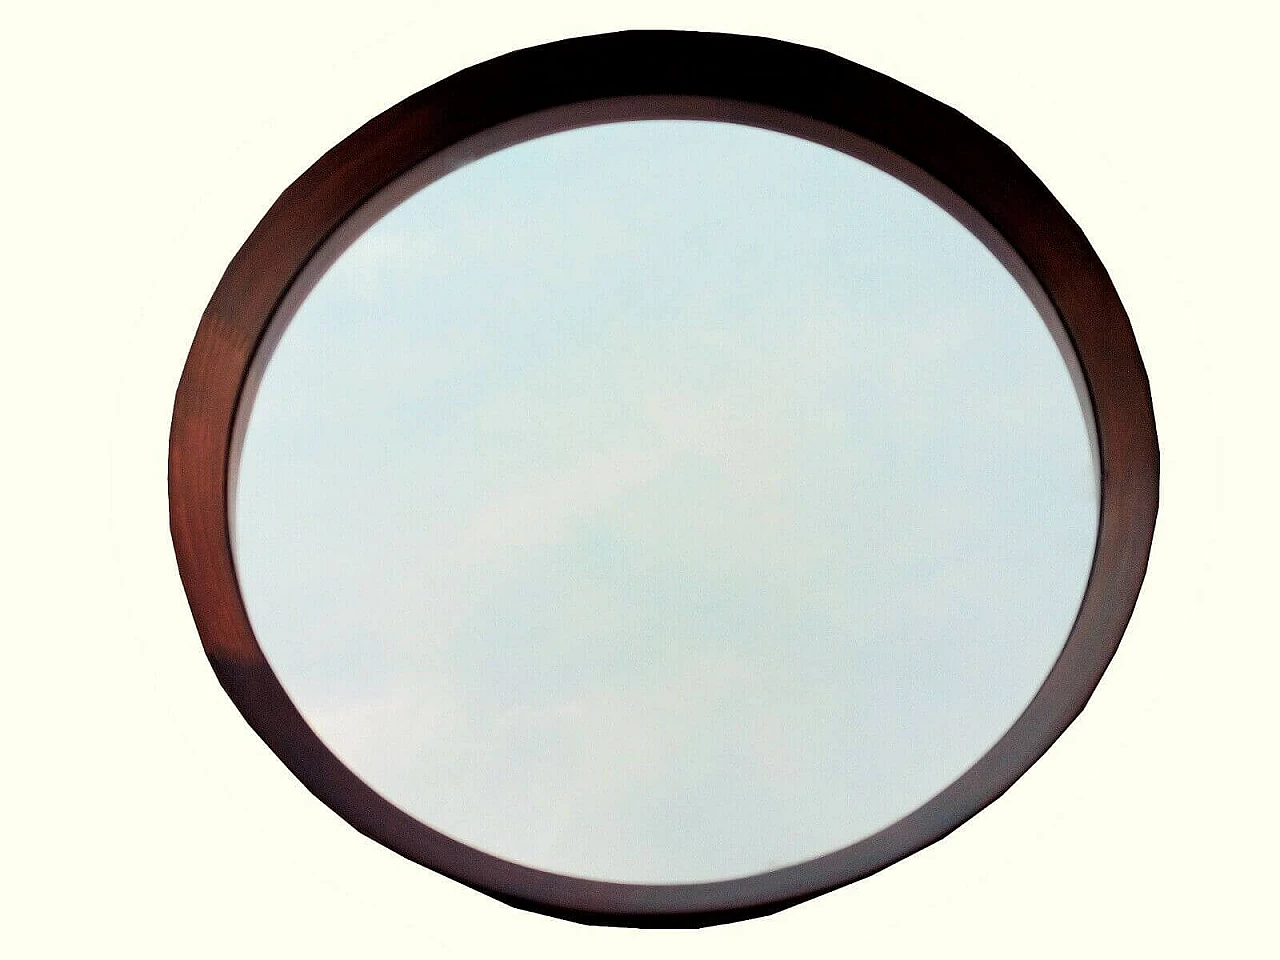 Teak mirror attributed to Saporiti production, 1960s 1